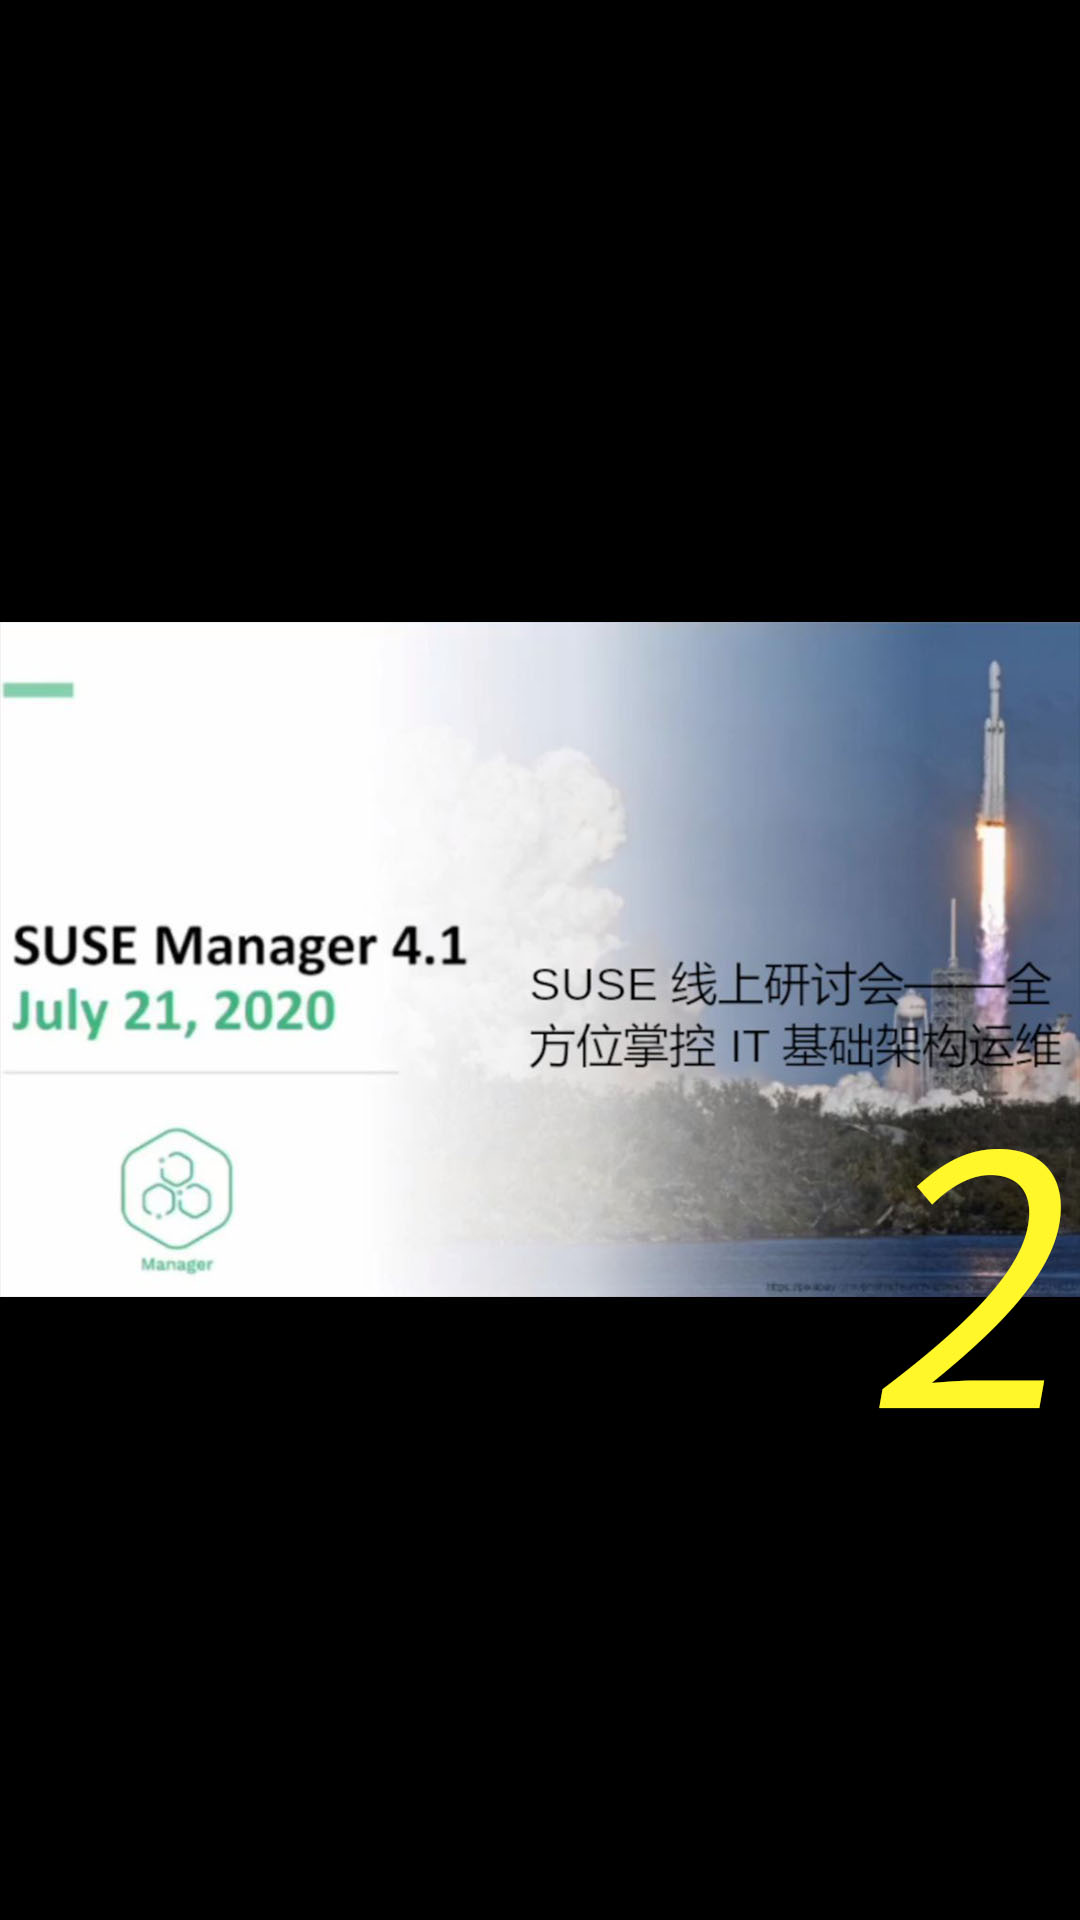 SUSE 线上研讨会——全方位掌控IT基础架构运维（在线学习分享）2